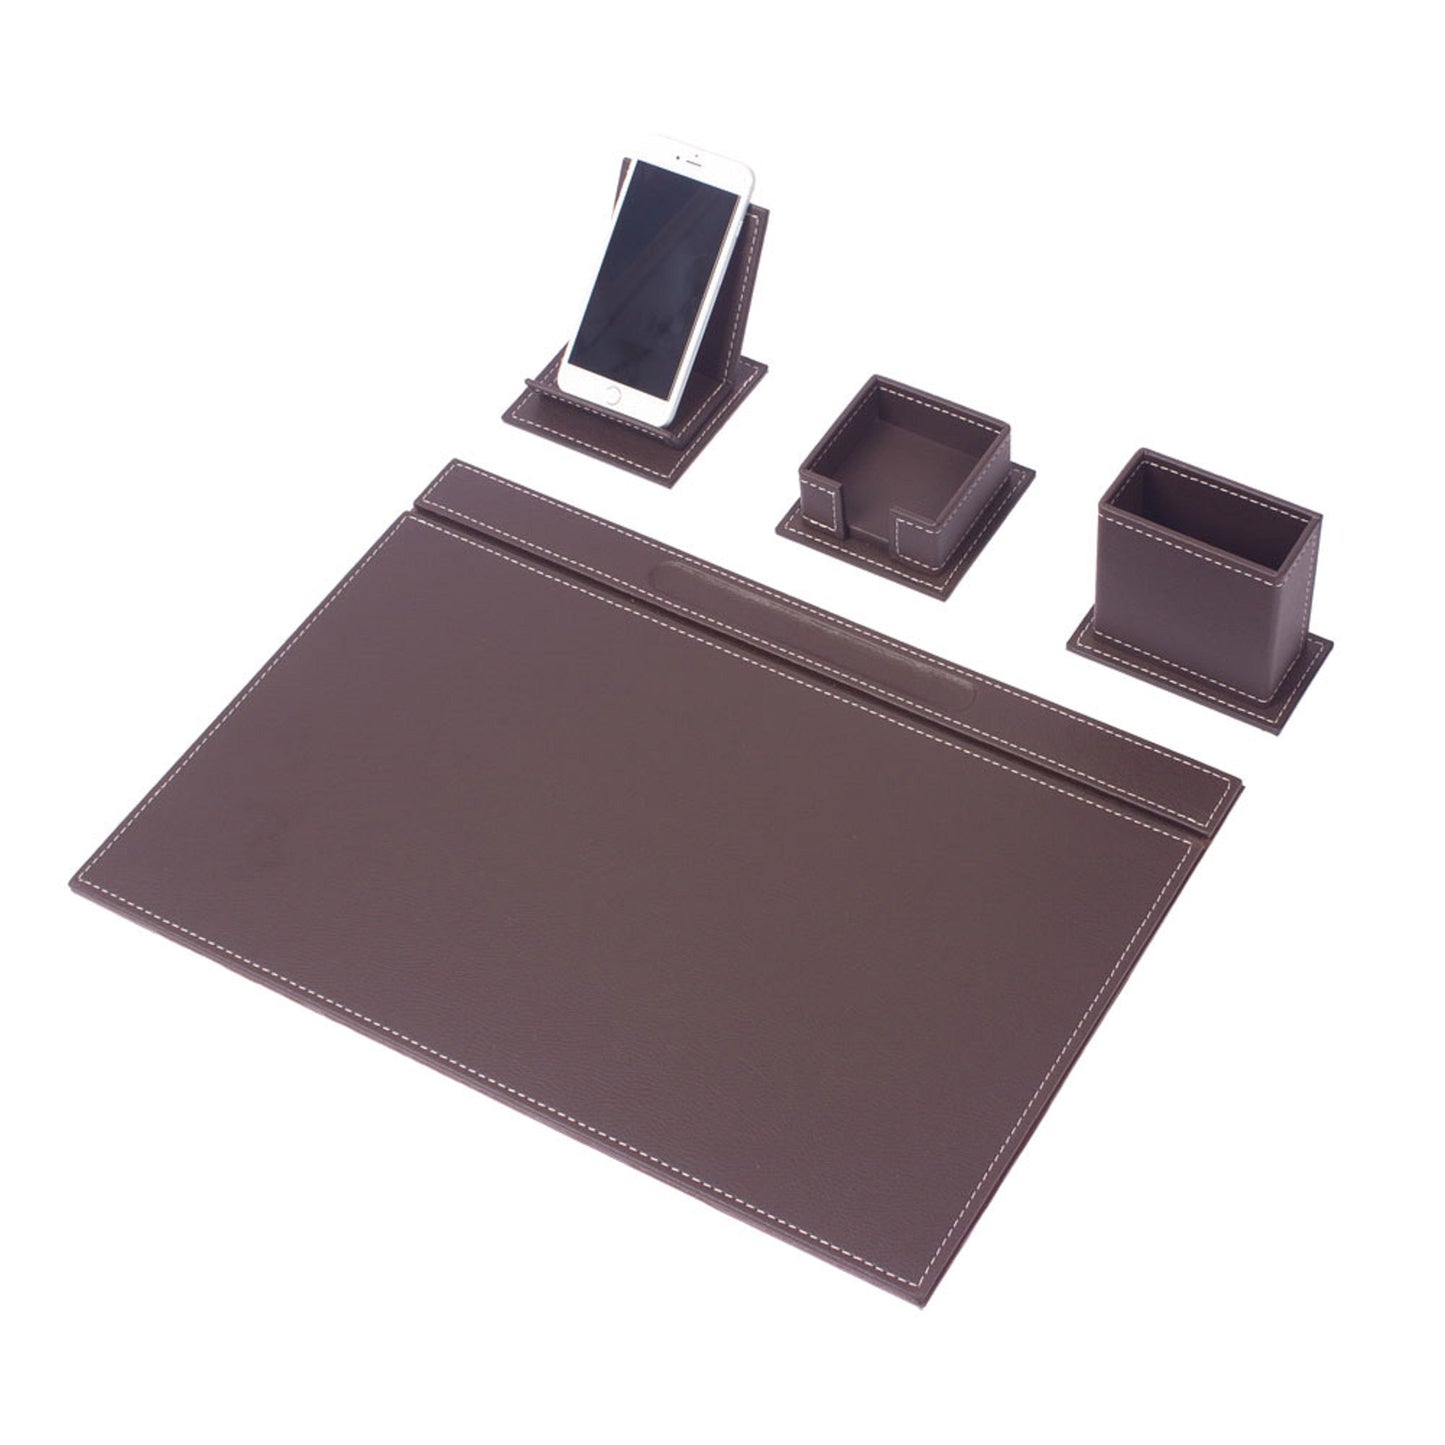 MOOG  Luxury Desk Set -  Leather Desk Set with 4 accessories - Organizer Set - Desk Office Accessories-Storage-Desk Organizers And Accessories-4 PCS